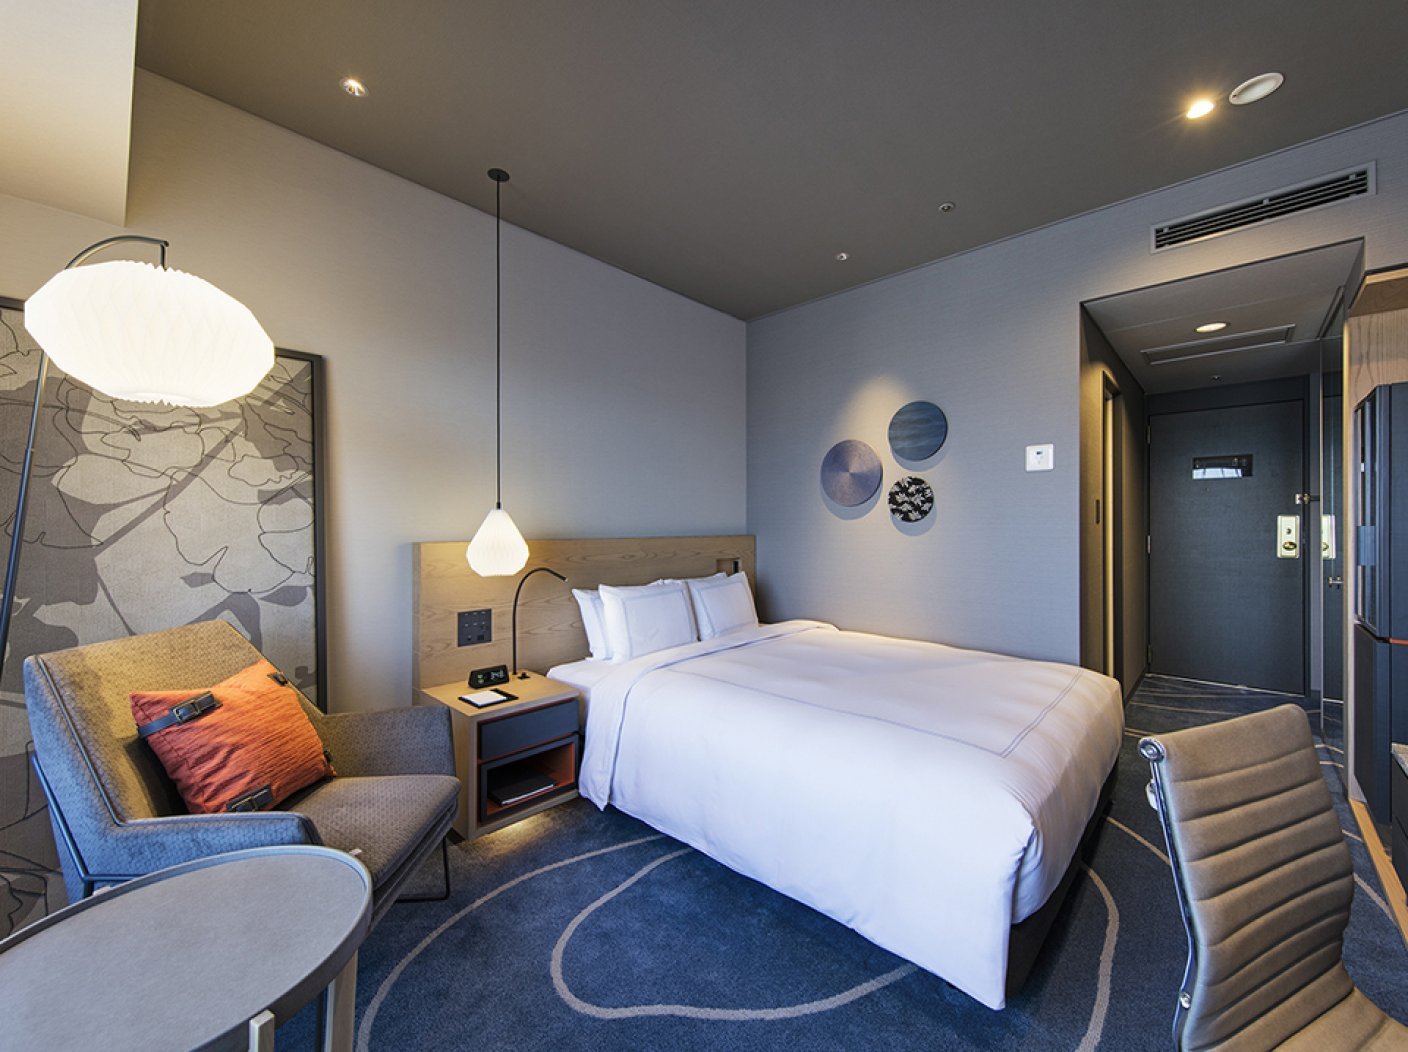 Select Room -スイスホテル南海大阪-の写真 7